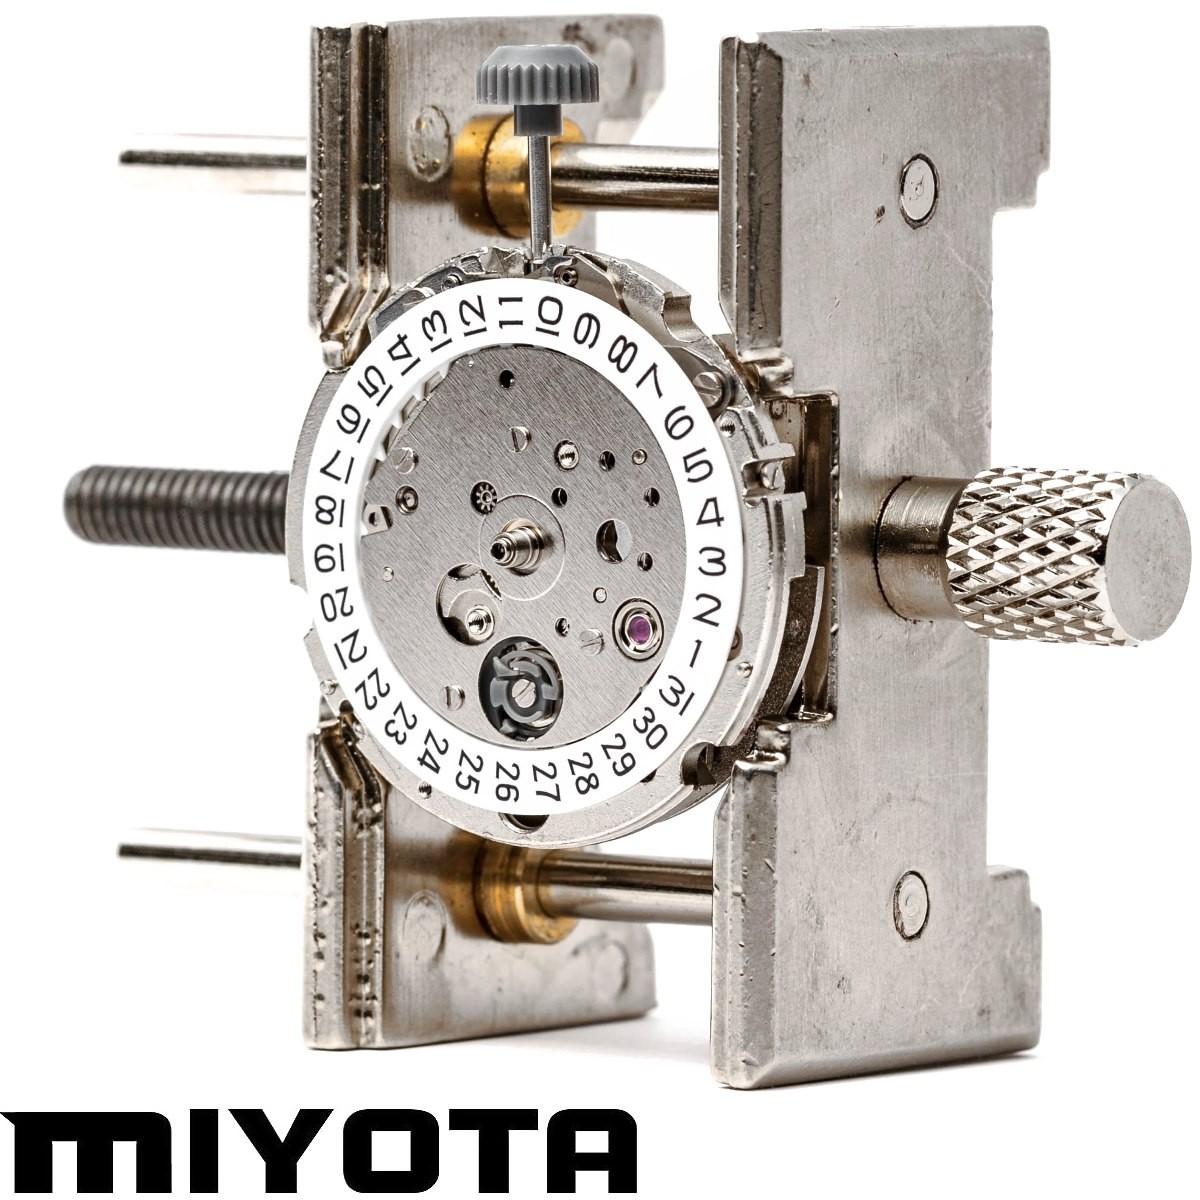 Miyota 8215 3W Automatik-Uhrwerk als preiswerte Alternative zu ETA 2824